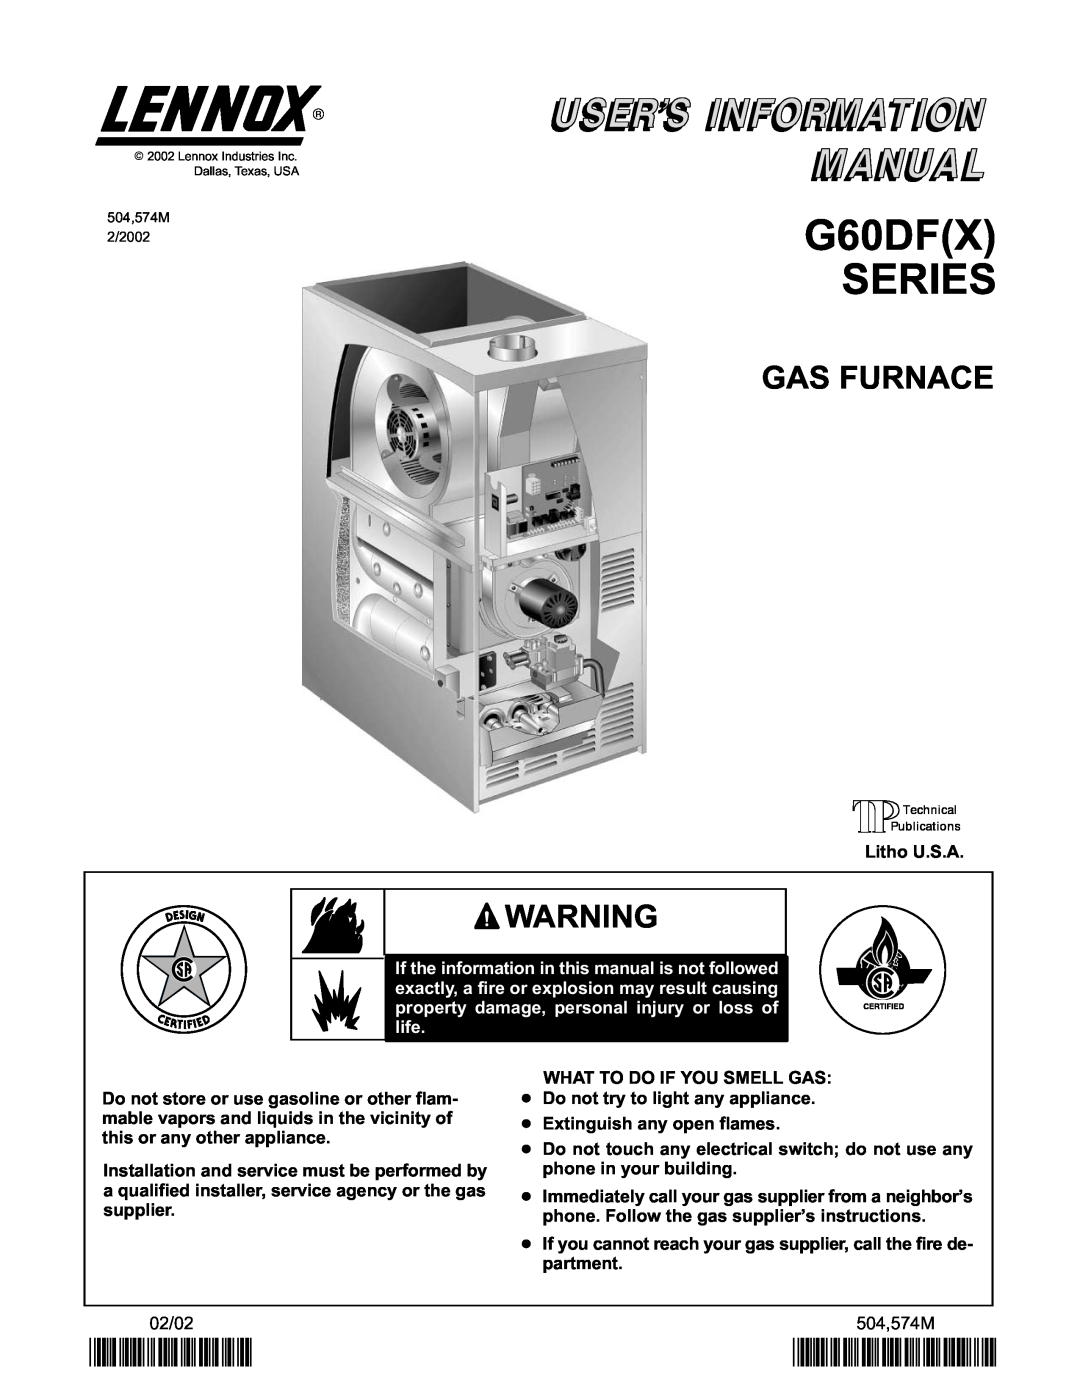 Lenoxx Electronics G60DF(X) manual G60DFX SERIES, Gas Furnace, 2P0202, P504574M 